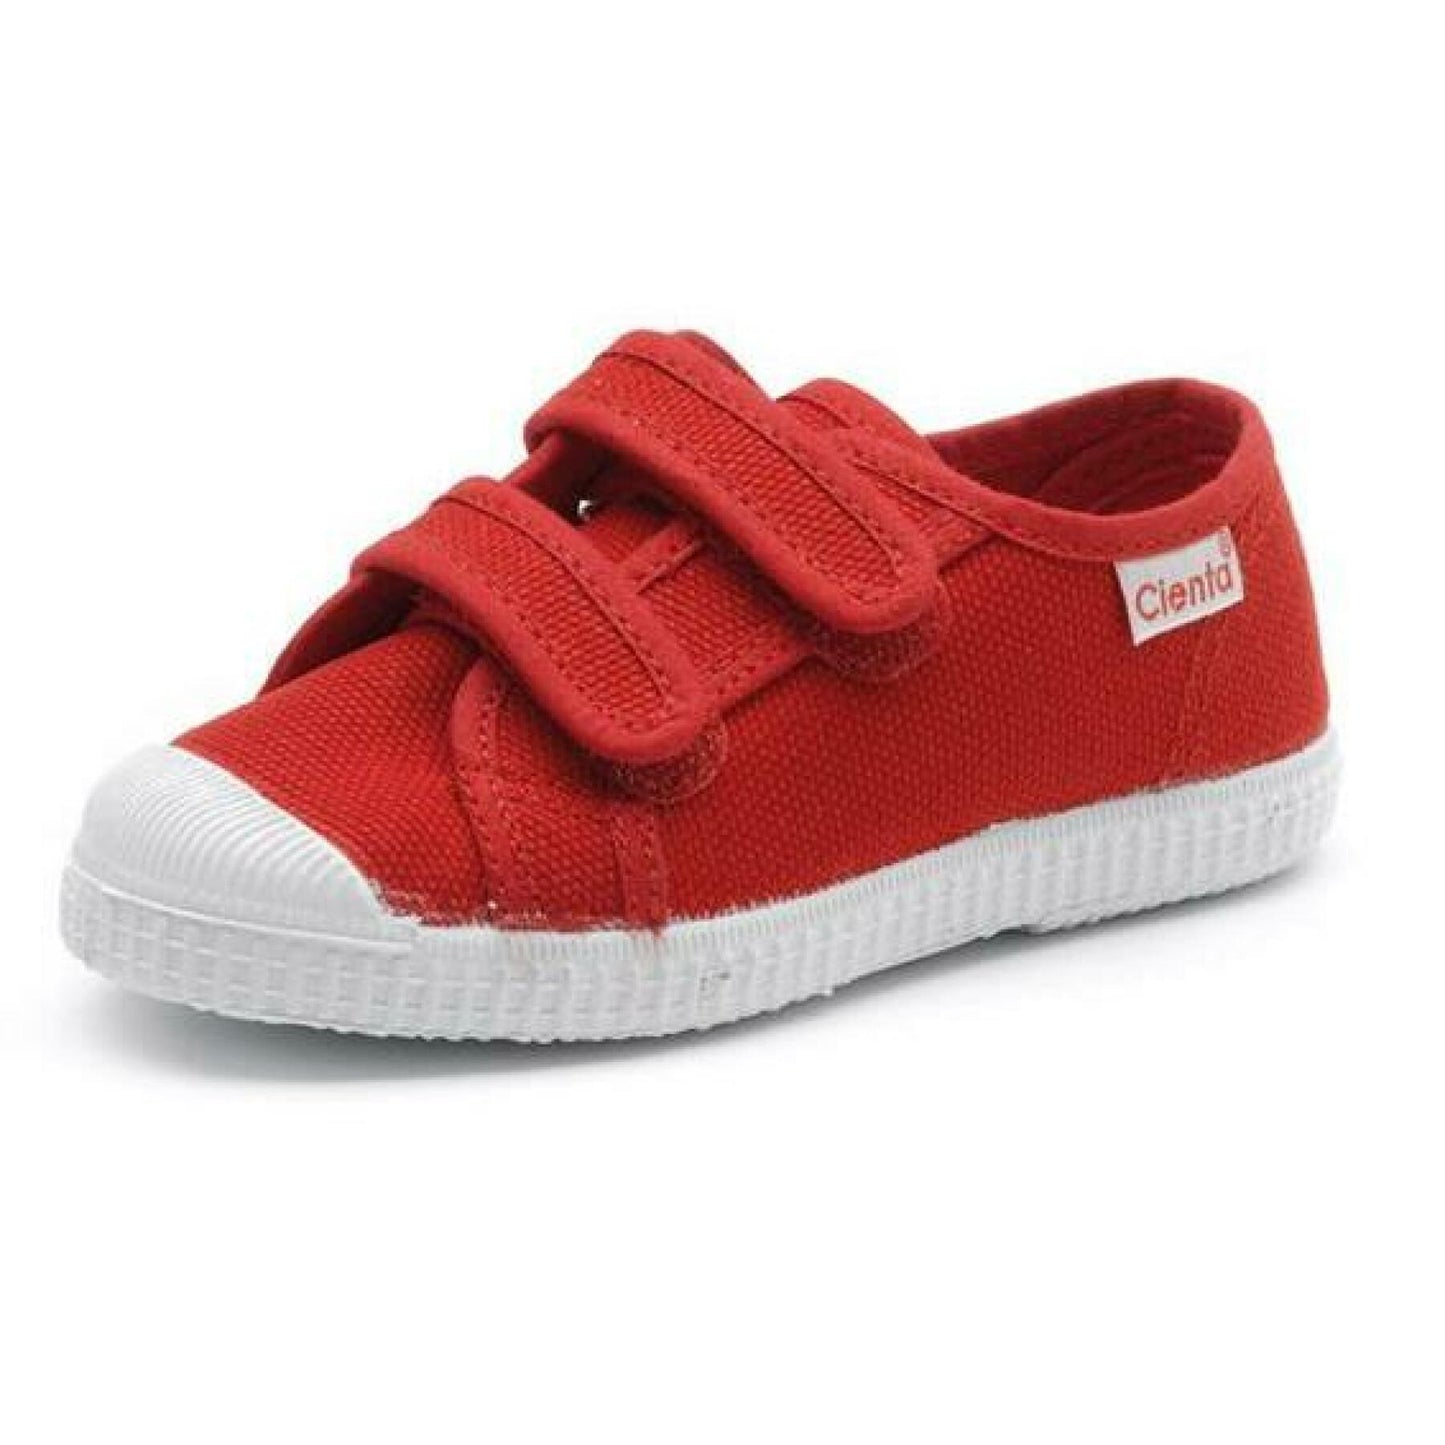 Cienta Doblo Velcro Shoes - Red